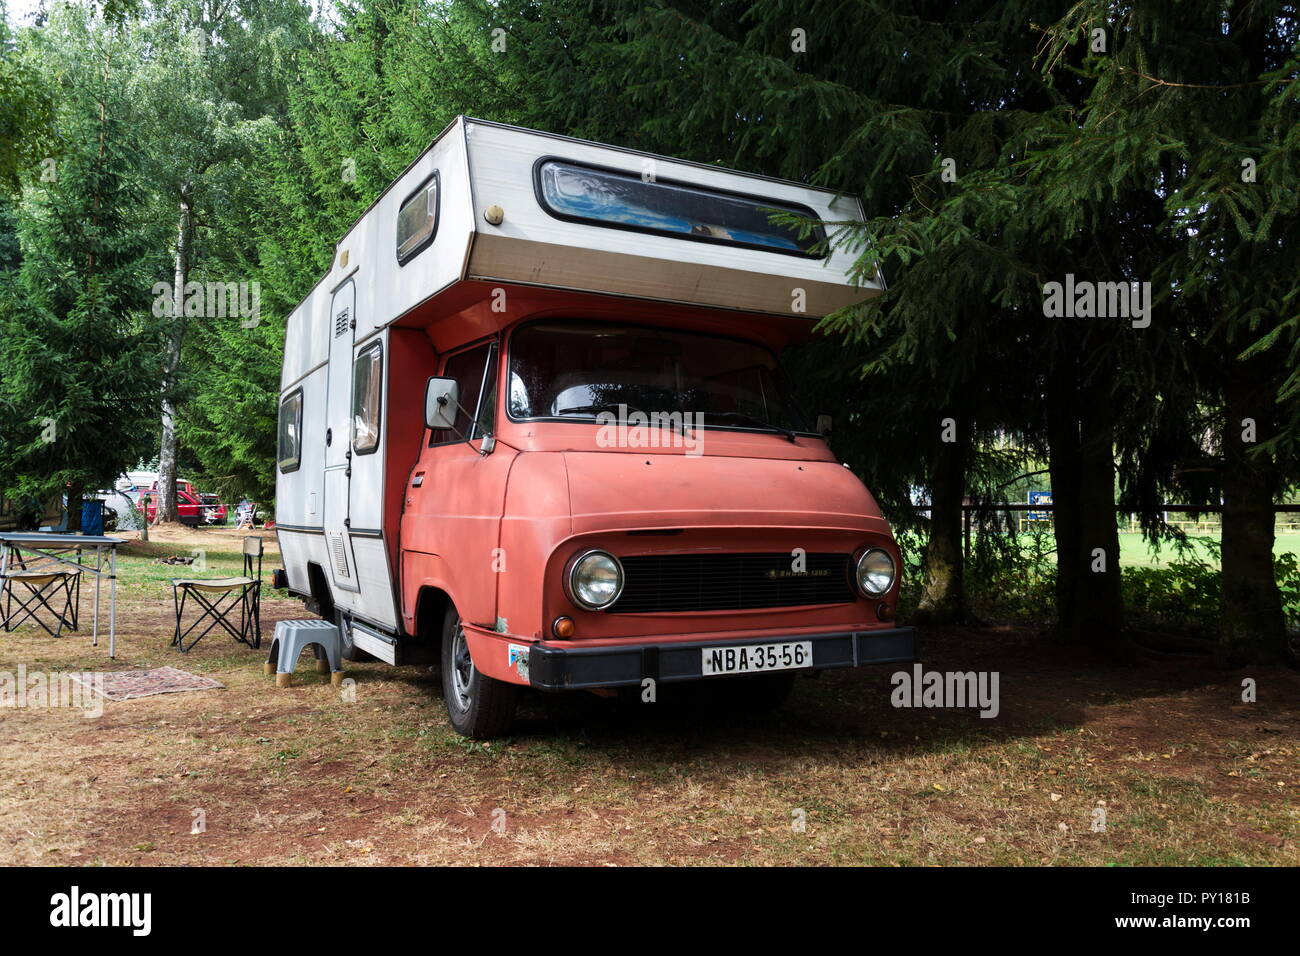 DOLNI KALNA, CZECH REPUBLIC - AUGUST 25 2018: Vintage car Skoda 1203 oldsmobile veteran adapted as caravan for living stands on August 25, 2018 in Dol Stock Photo